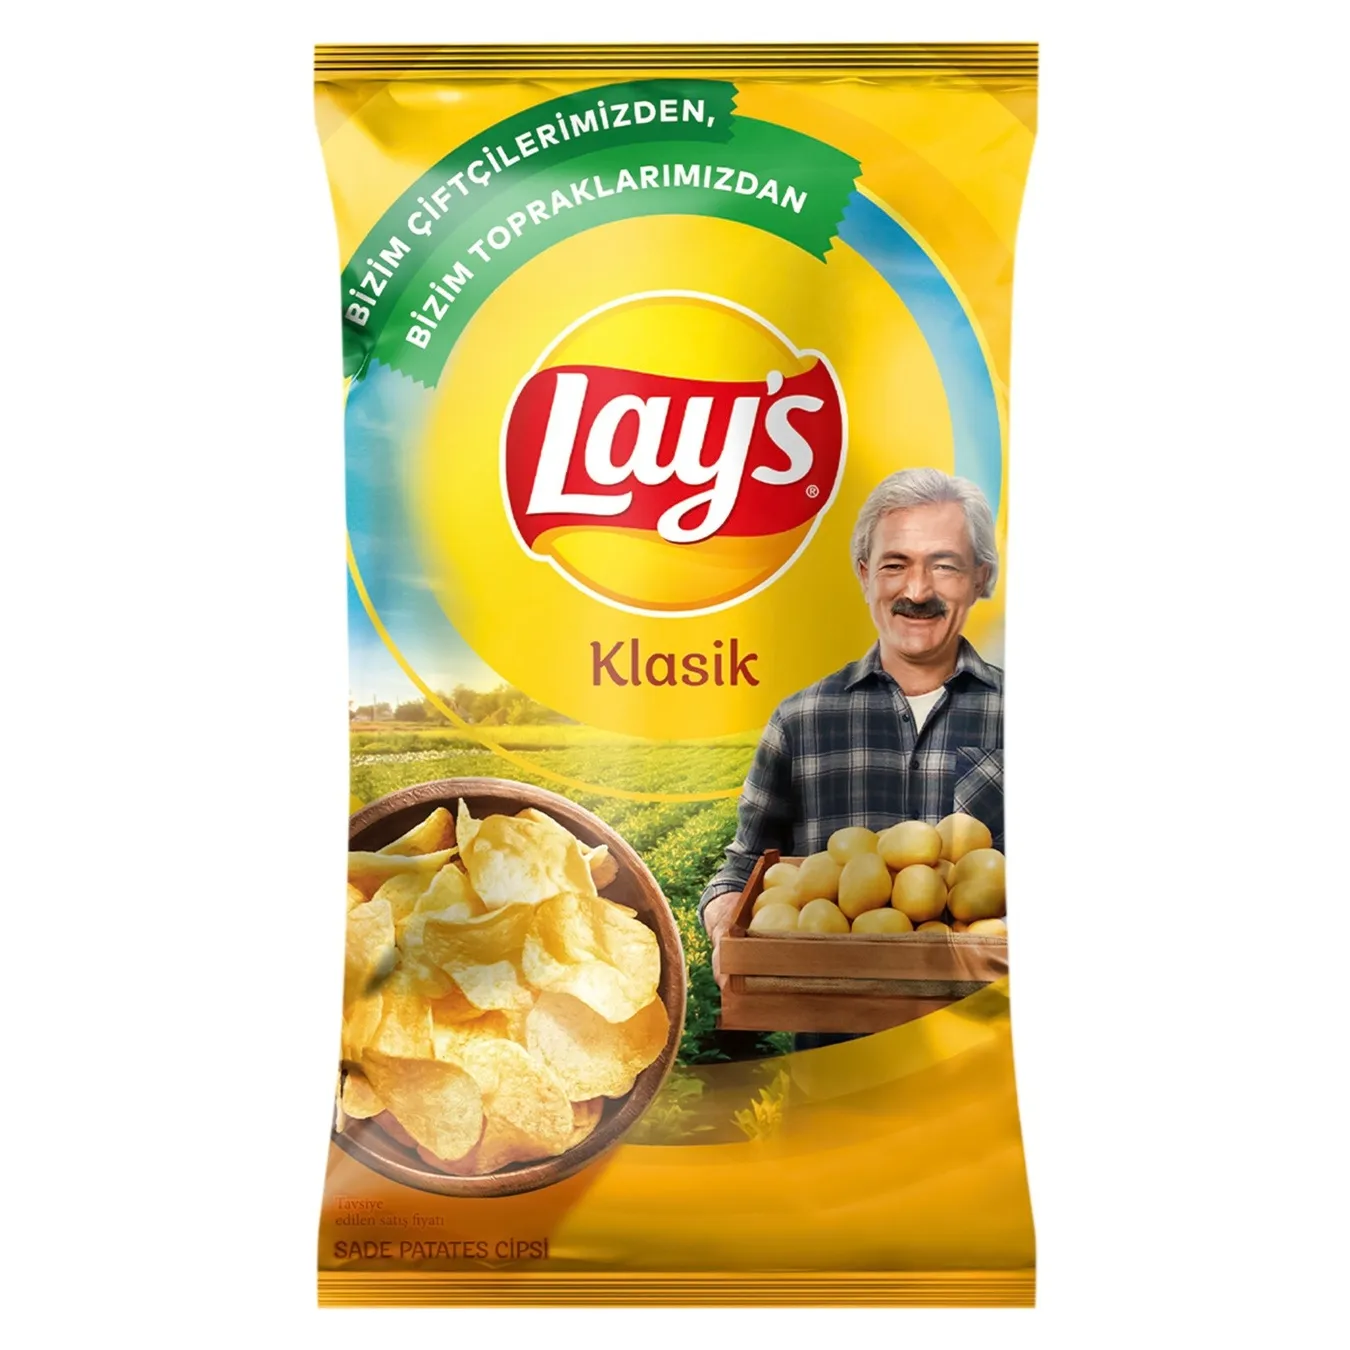 Lay's classic potato chips 104g